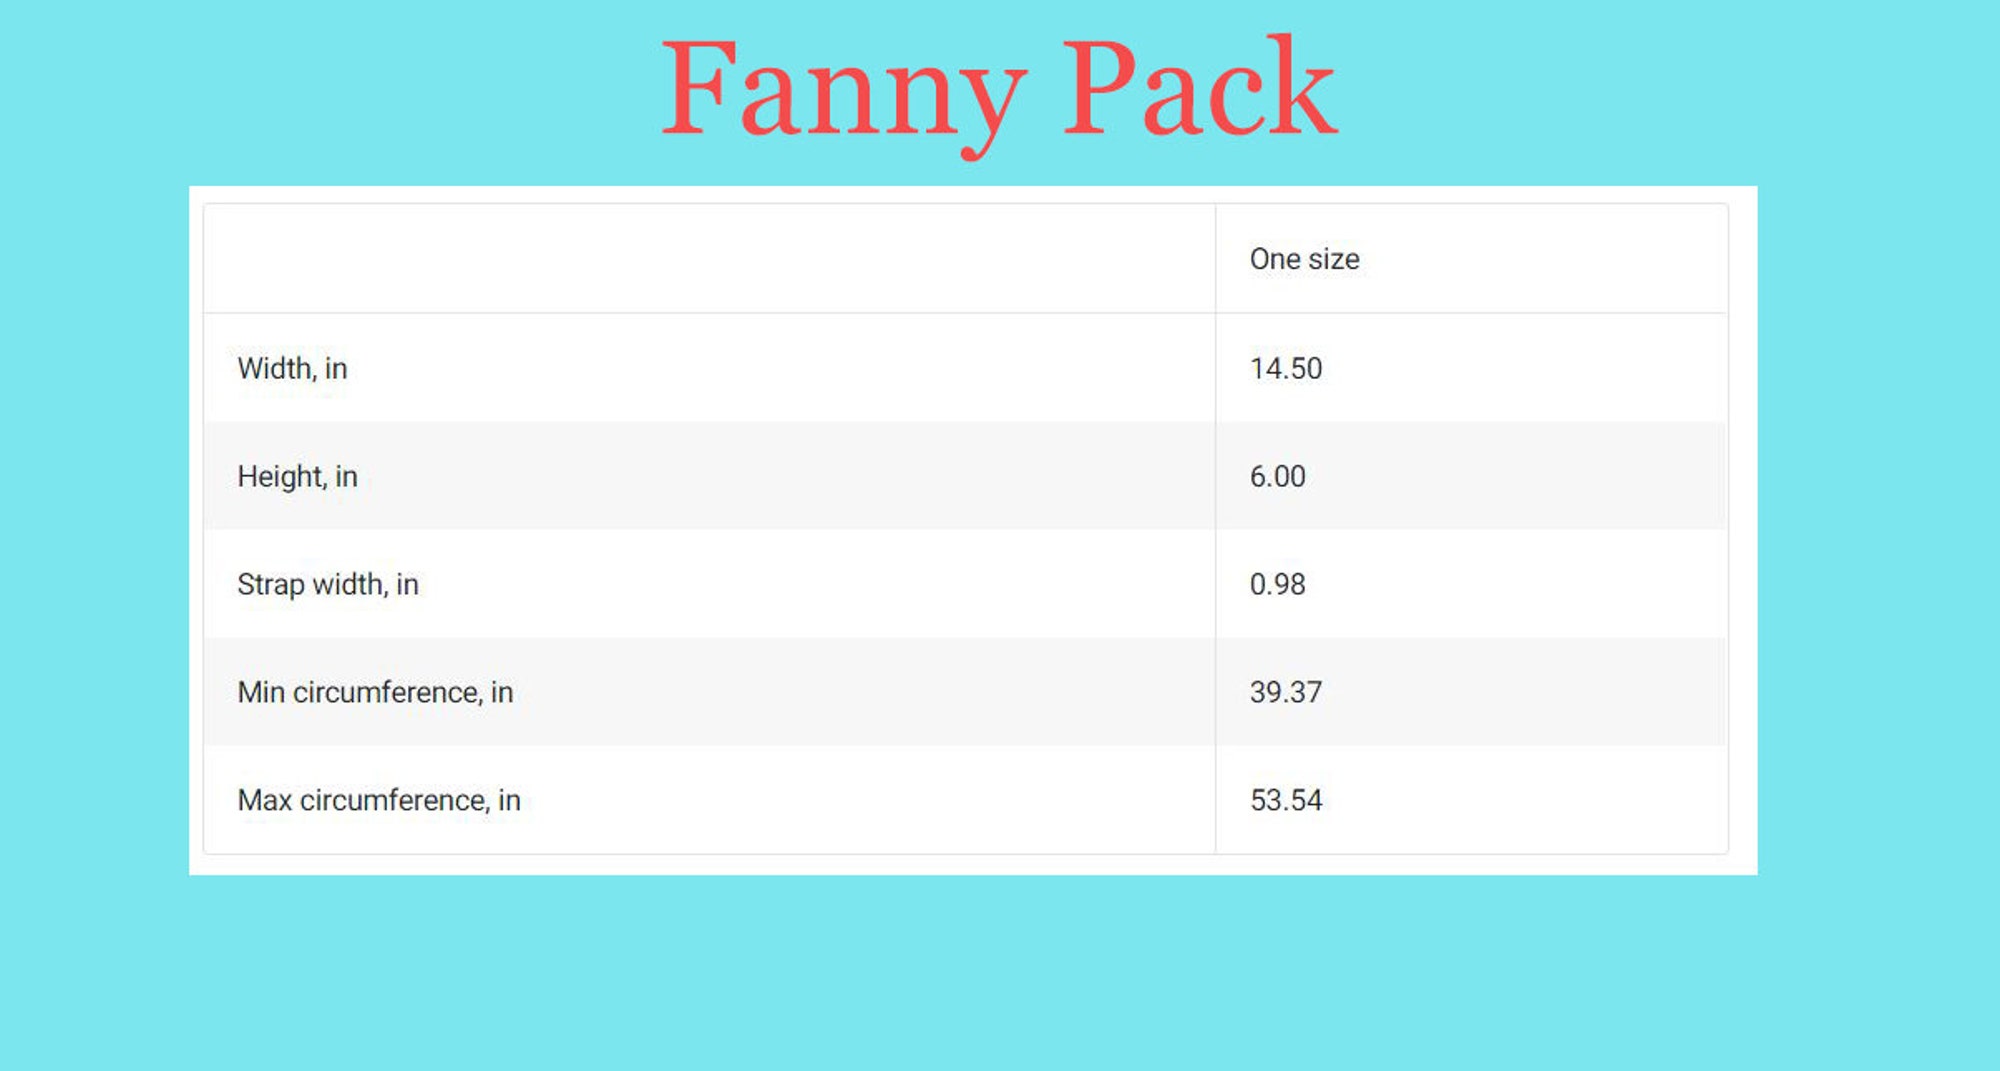 Classic Disney Dog Doodles - Fanny Pack